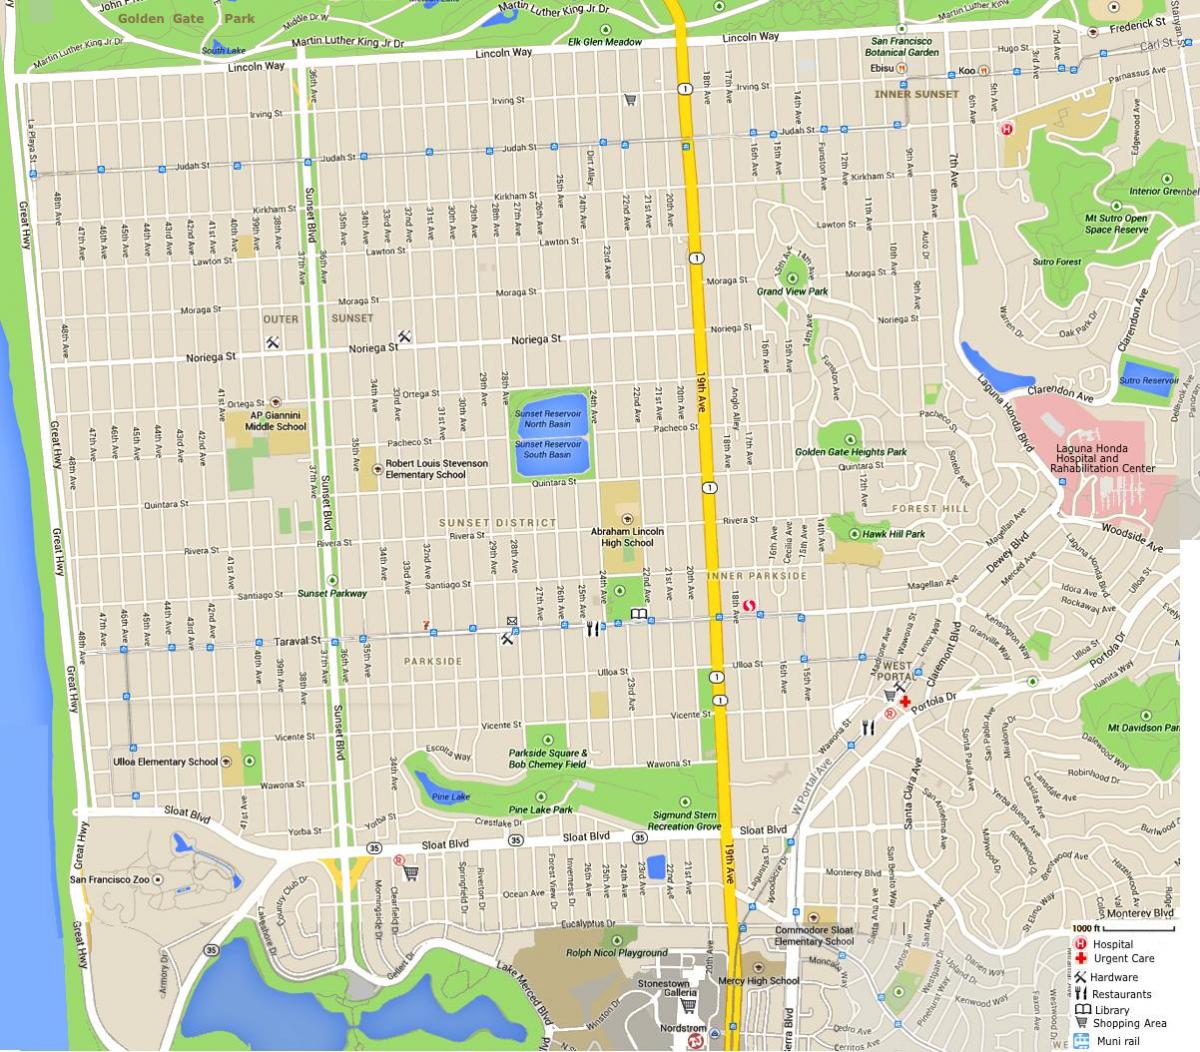 Peta dari san francisco San Francisco